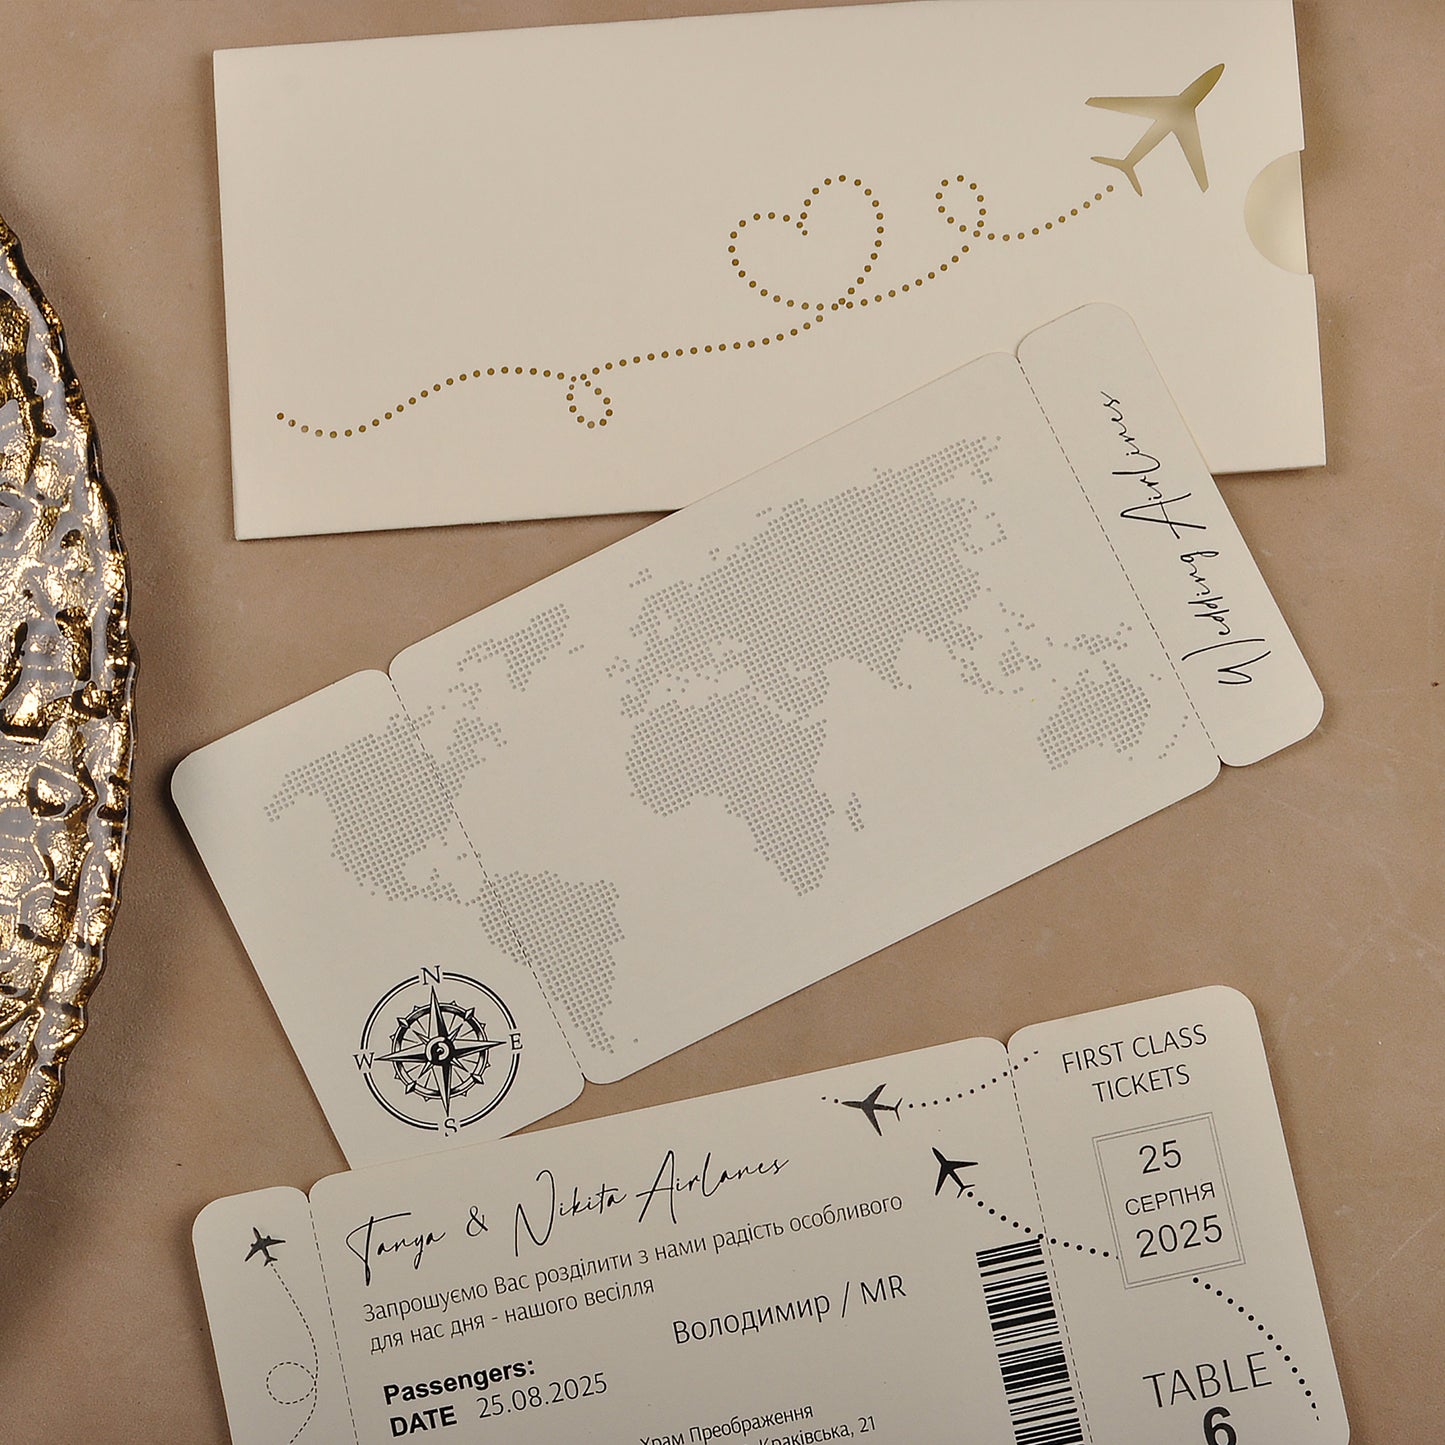 запрошення авіабілет приглашение в стиле авиабилета свадебный пригласительные в стиле авиа билета весільні запрошення авіа квиток Весільні запрошення у вигляді авіаквитка,